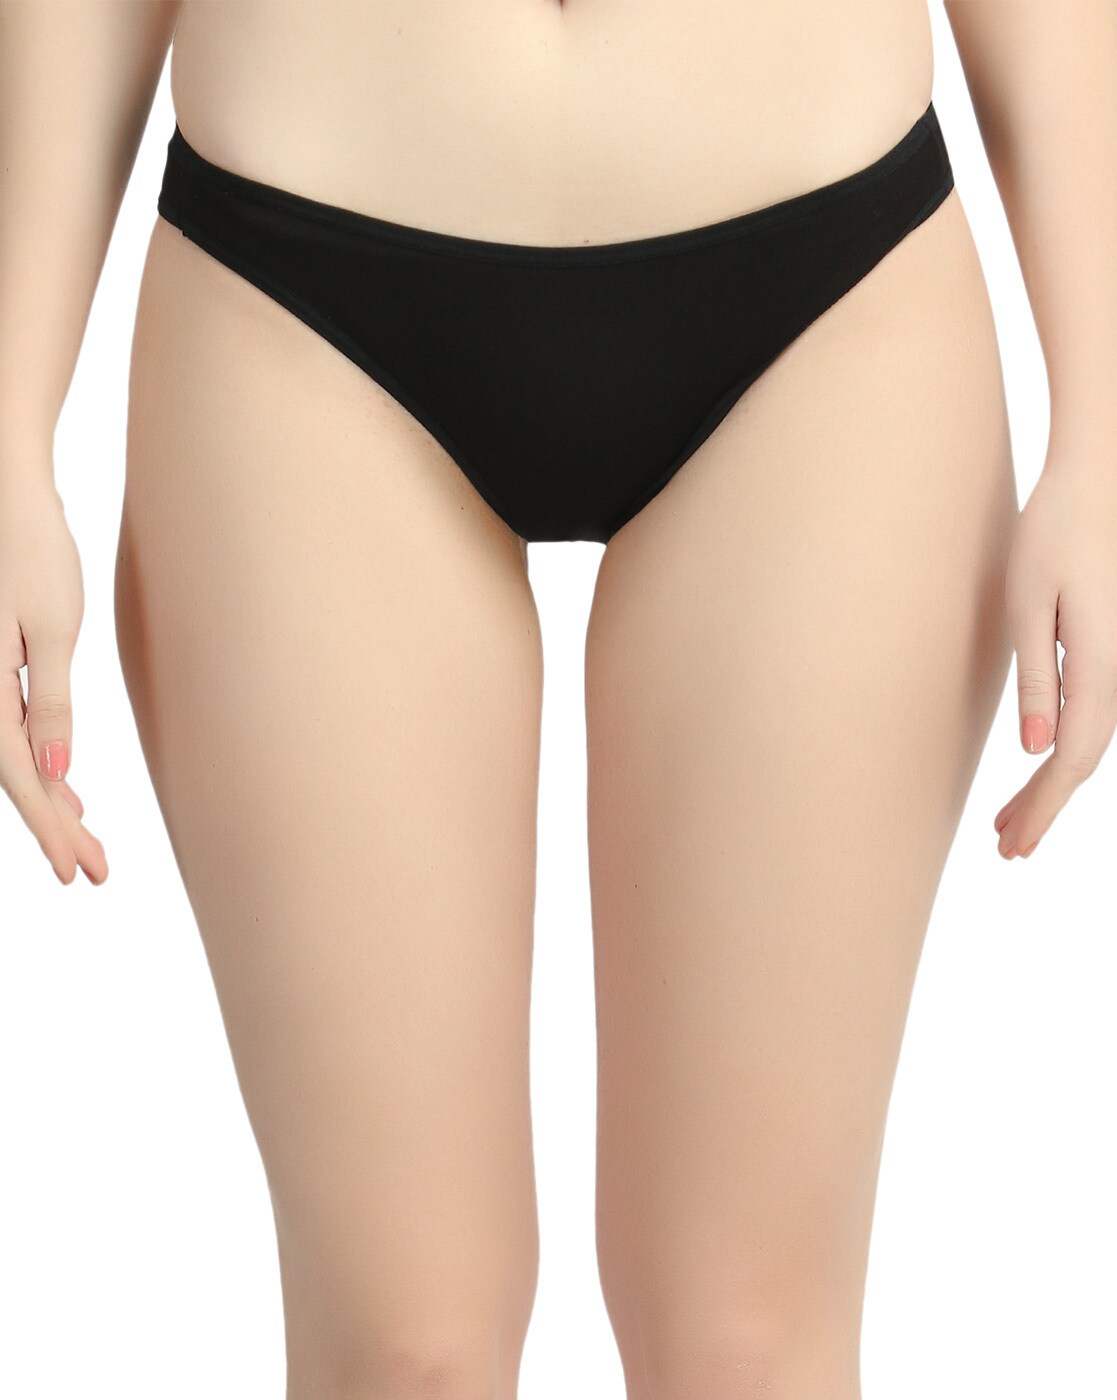 BaiTao Women's Underwear 3 Pack Elastic Soft Comfortable Cotton